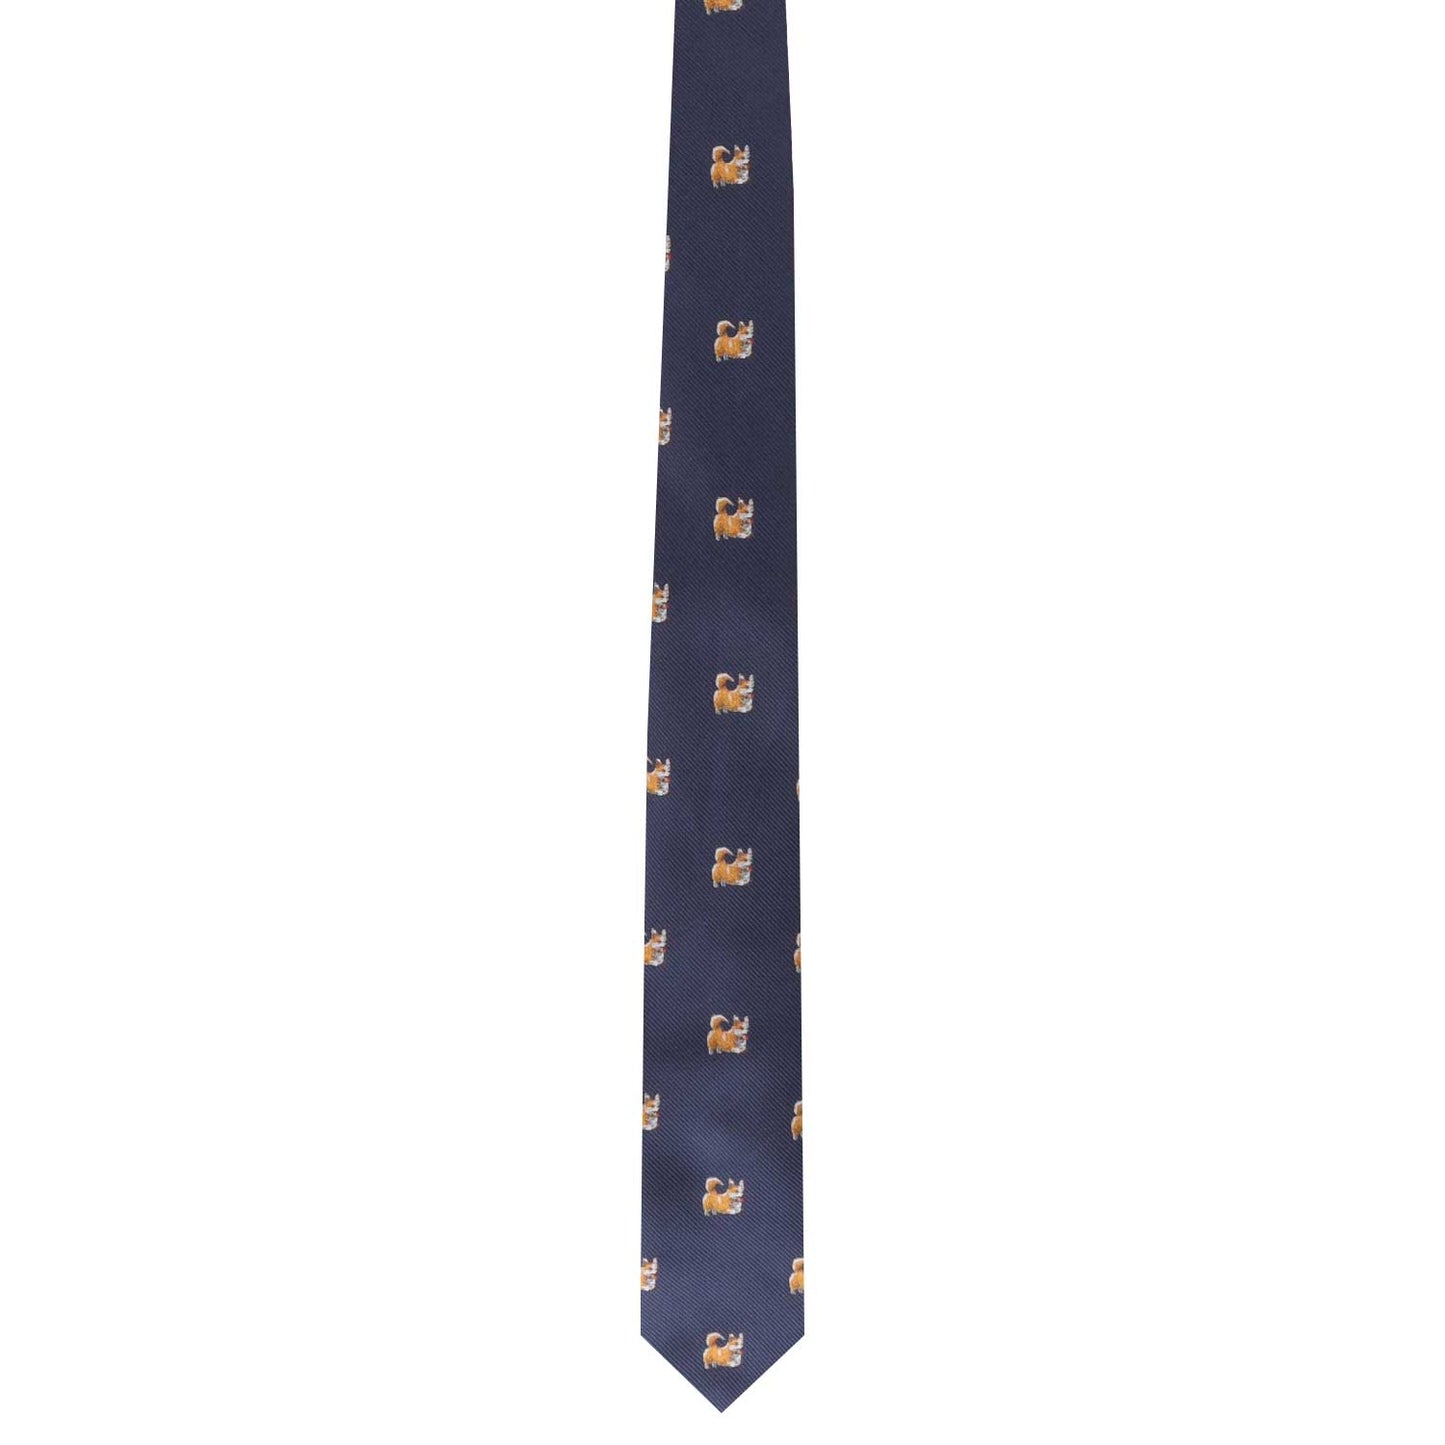 A **Corgi Dog Skinny Tie** with a **cat** on it.